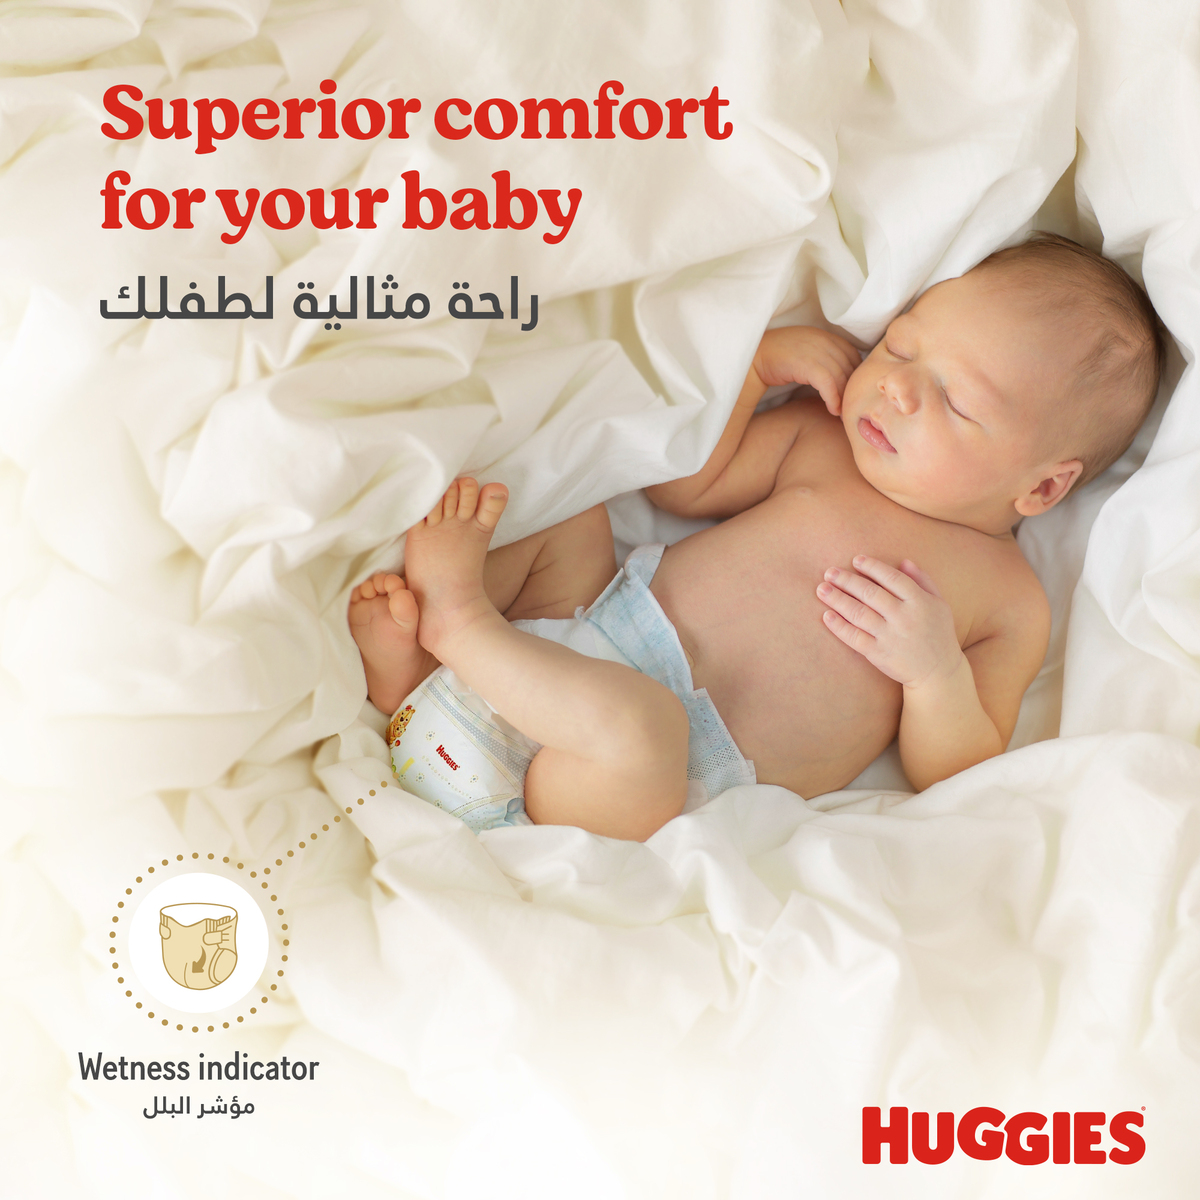 Huggies Extra Care Newborn Size 2 4 - 6 kg Carry Pack 21 pcs